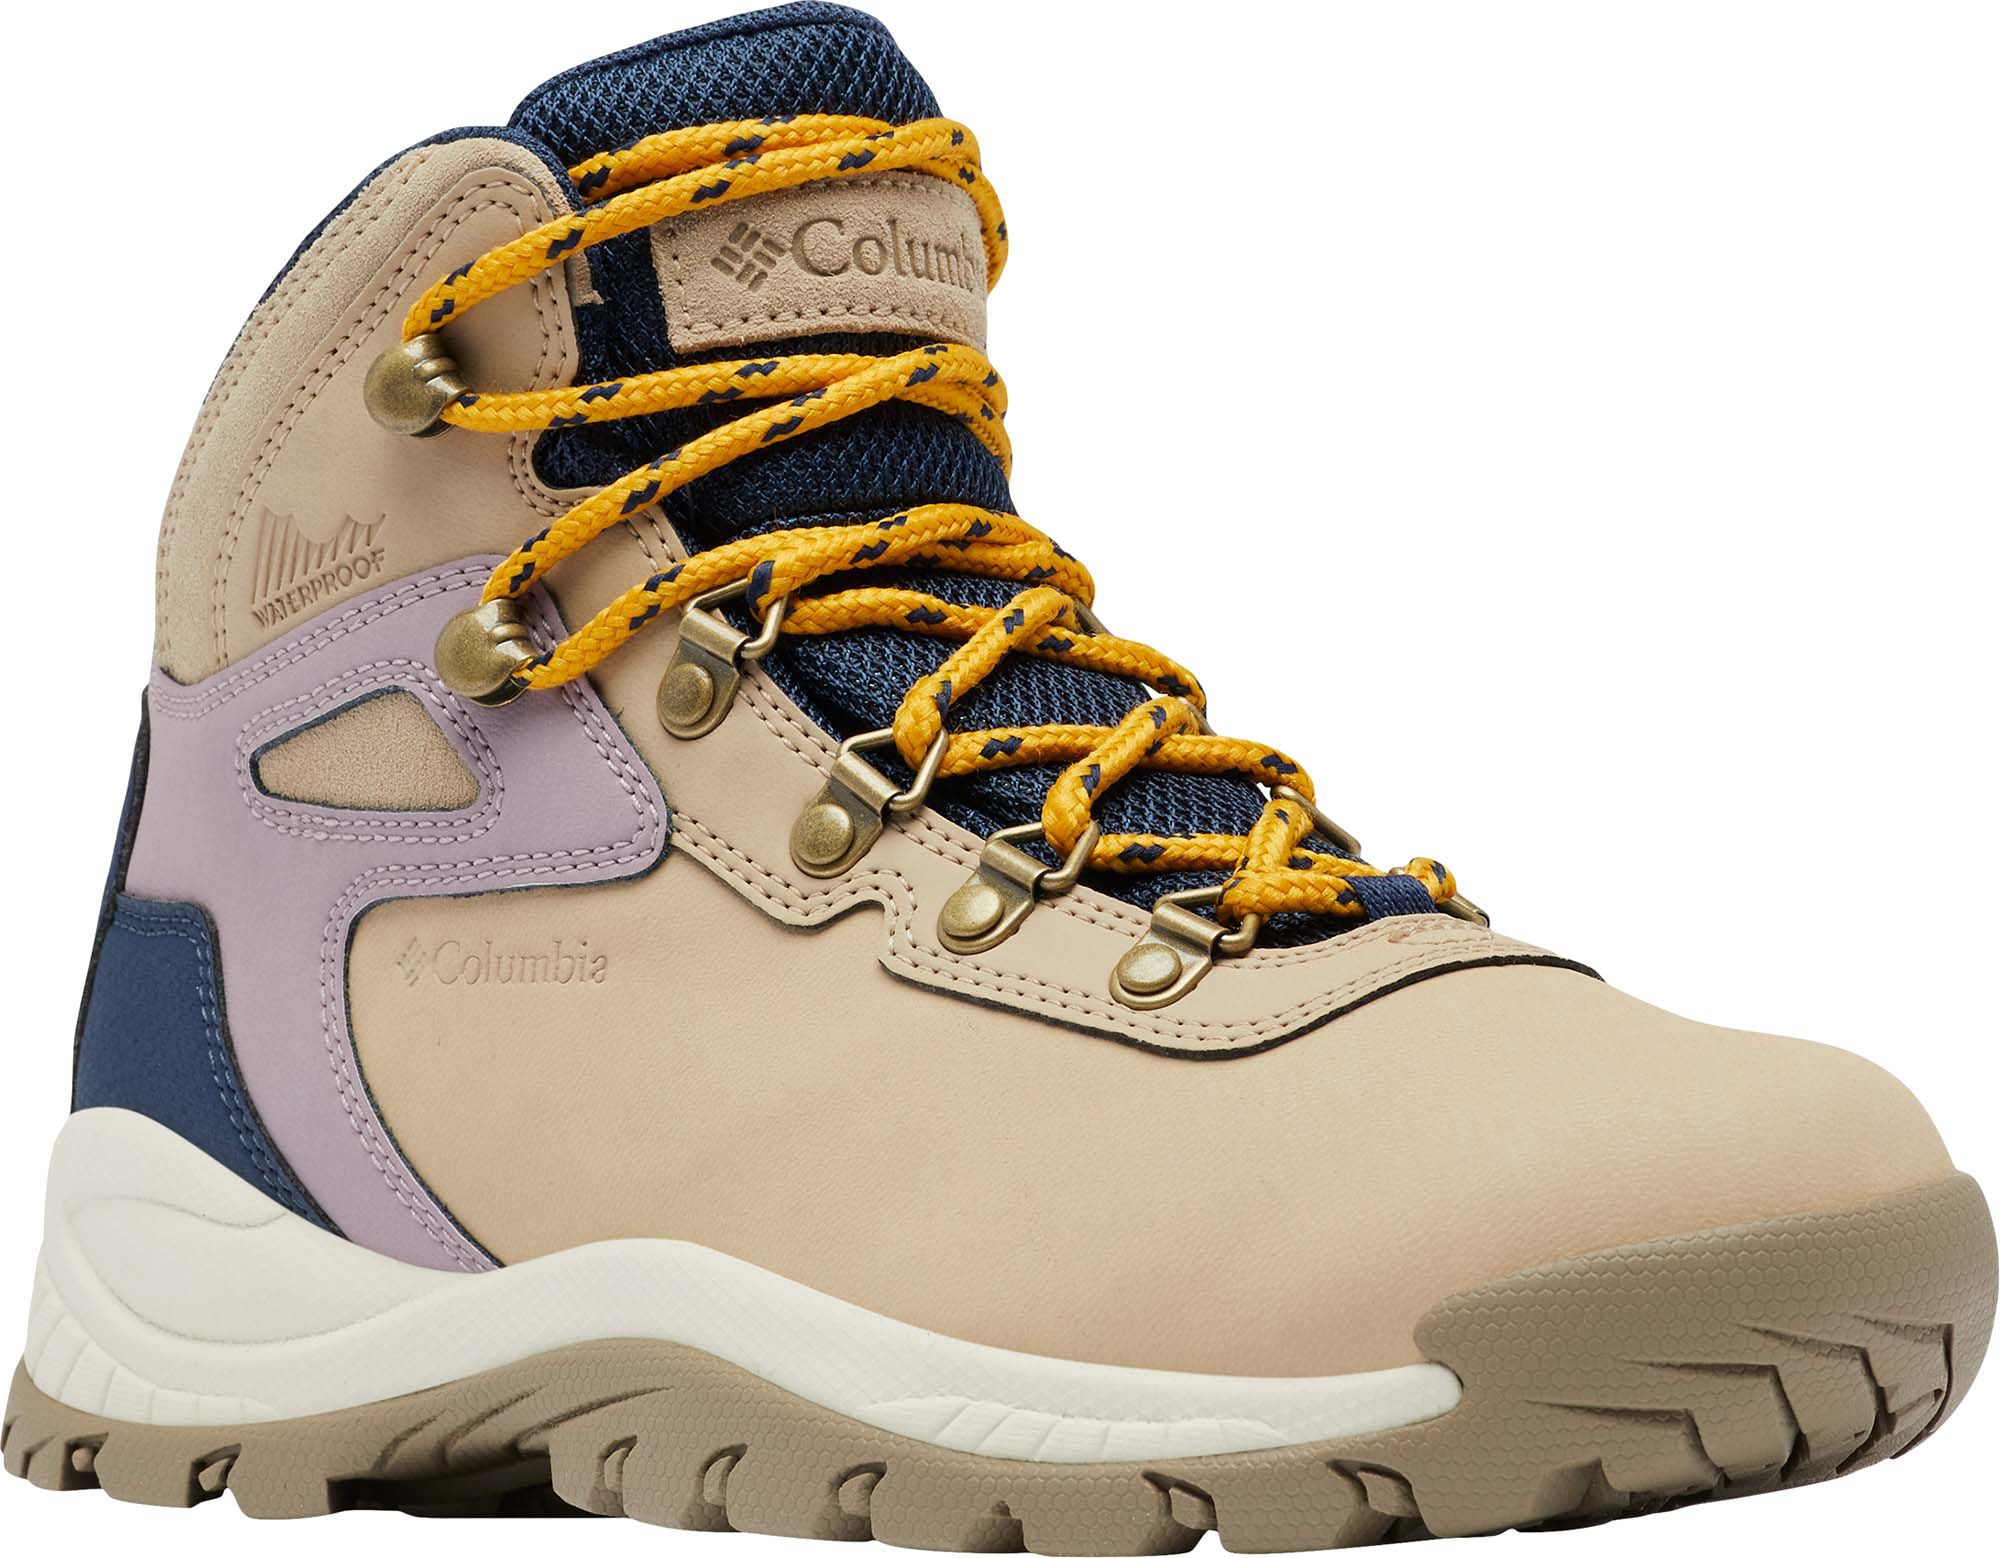 Photos - Trekking Shoes Columbia Women's Newton Ridge Plus Mid Waterproof Hiking Boots, Size 9, An 